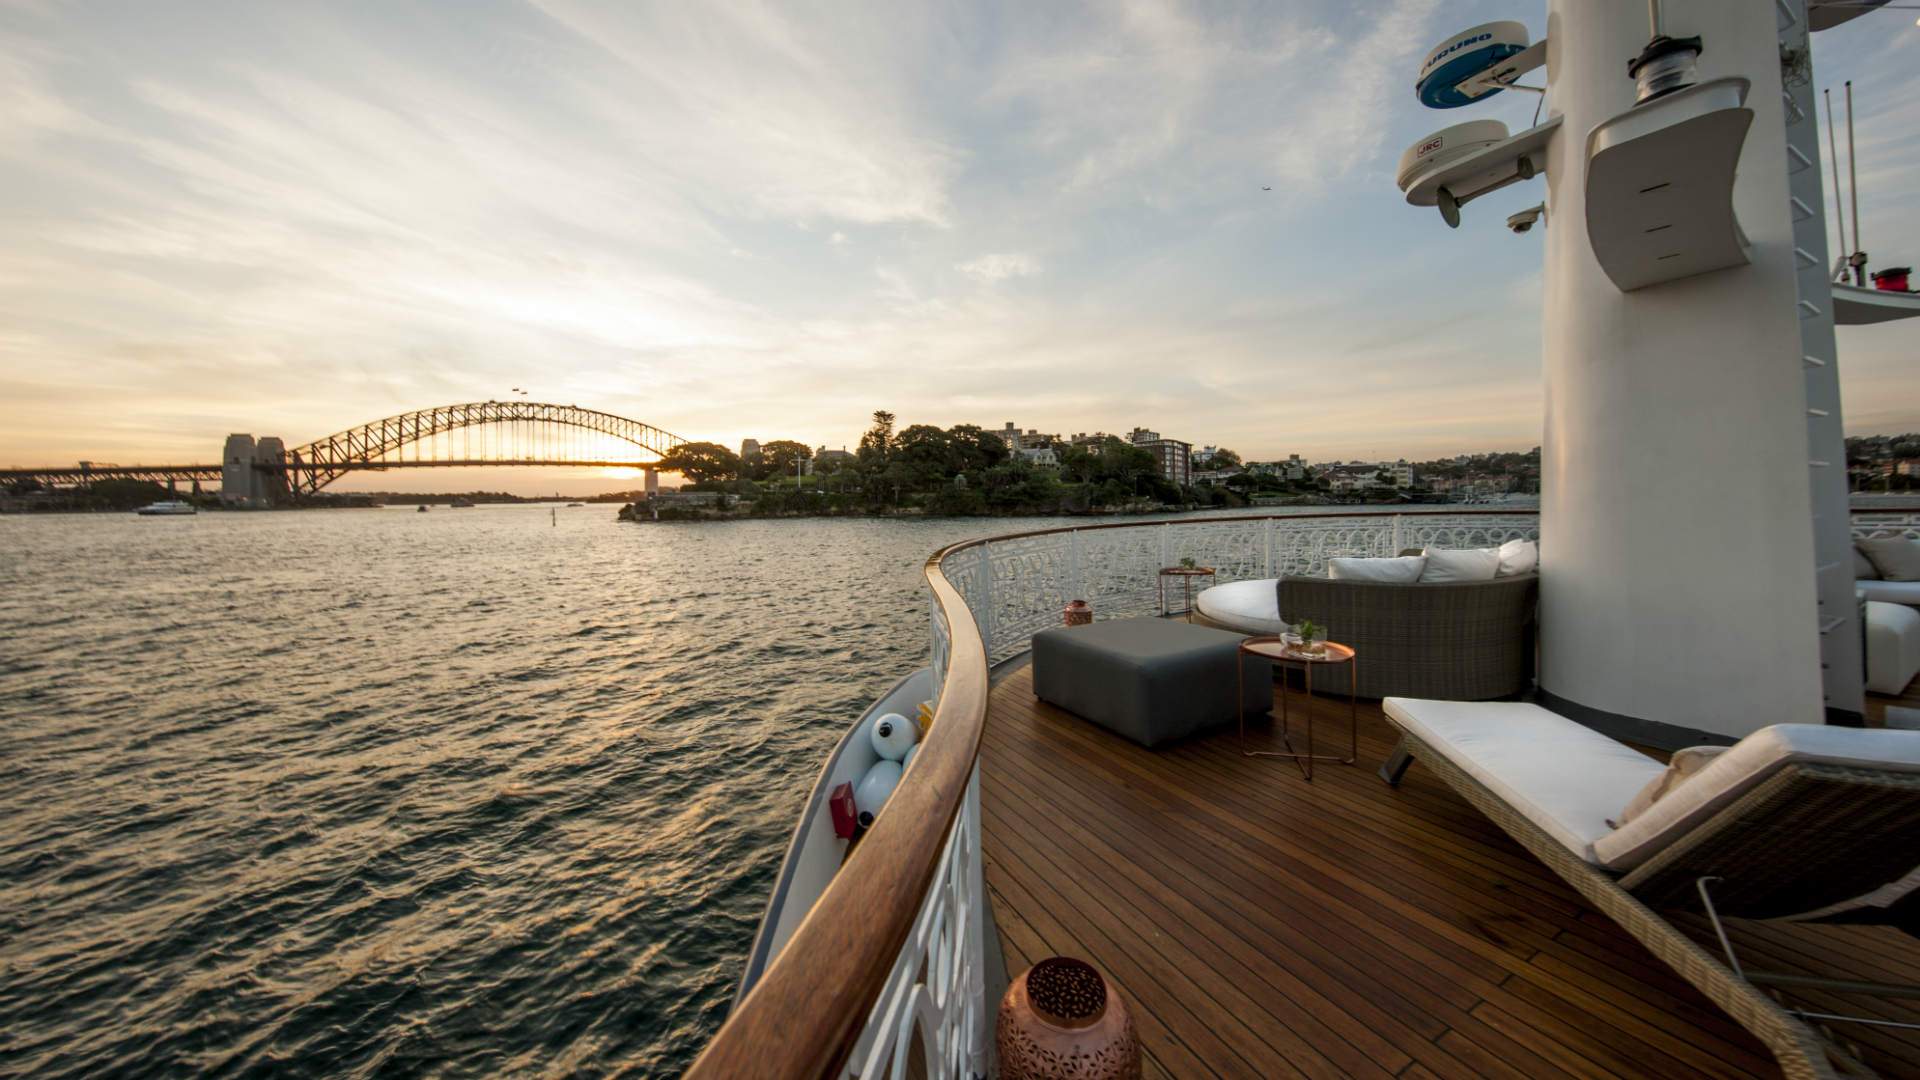 Glamorous Floating Venue Seadeck Is Returning to Brisbane